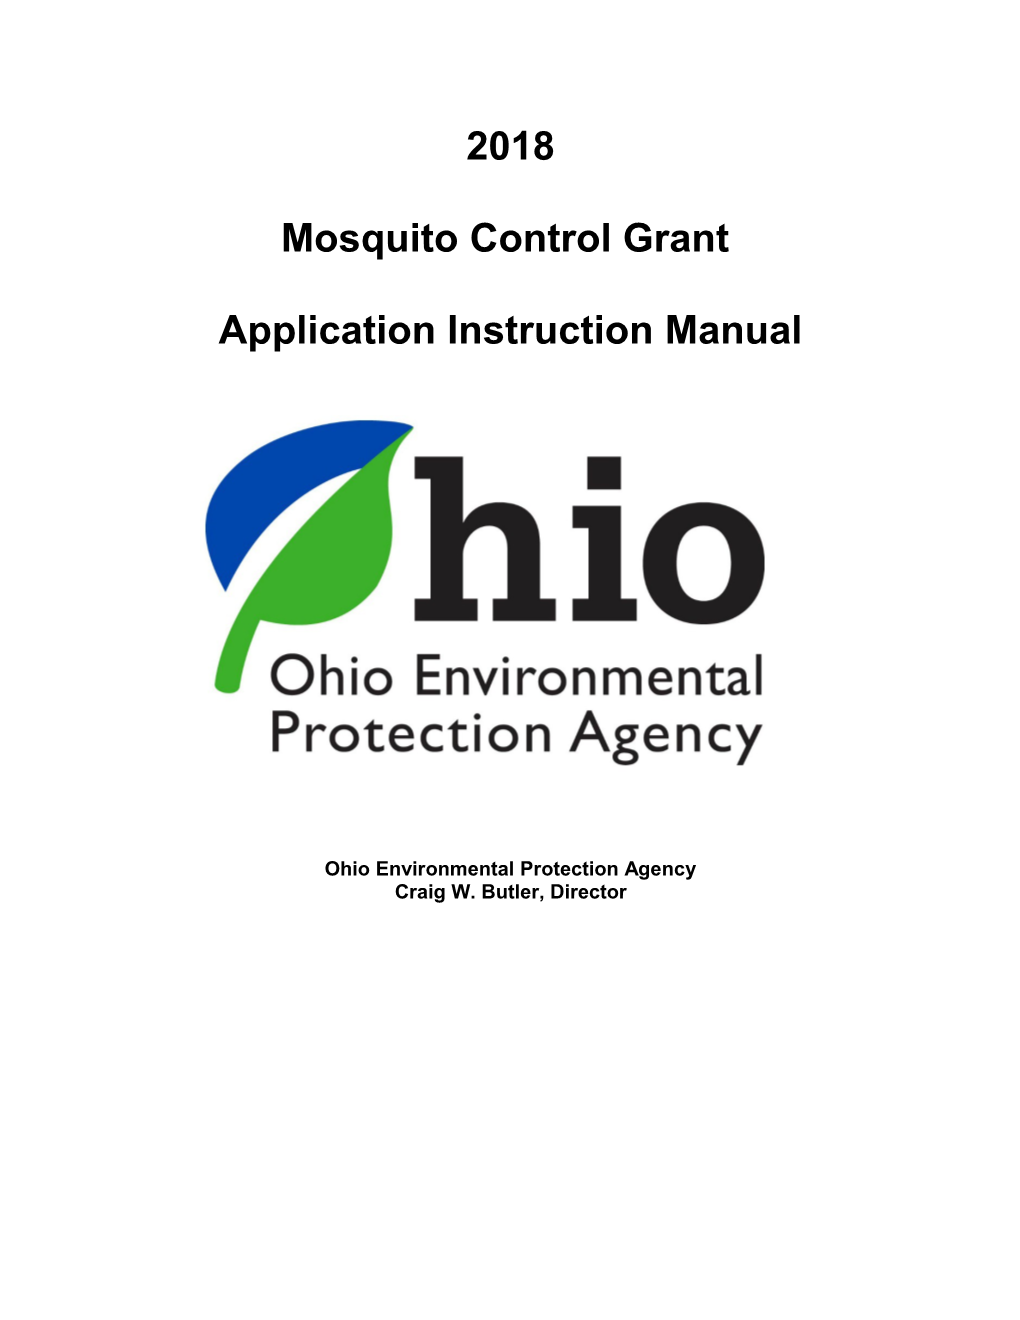 Mosquito Control Grant